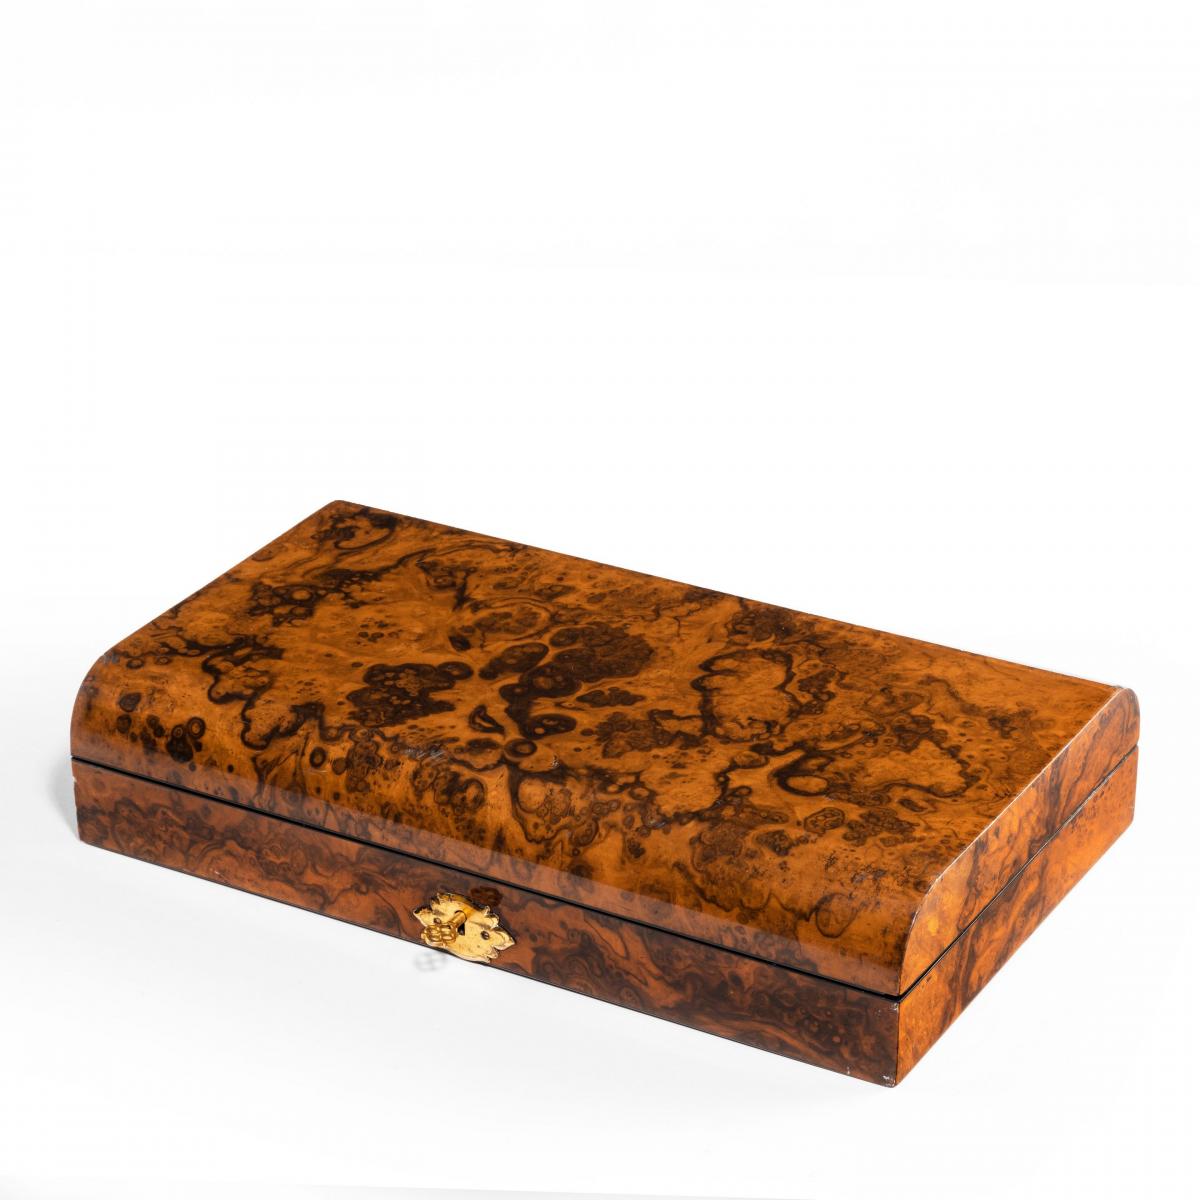 A high Victorian burr walnut games box